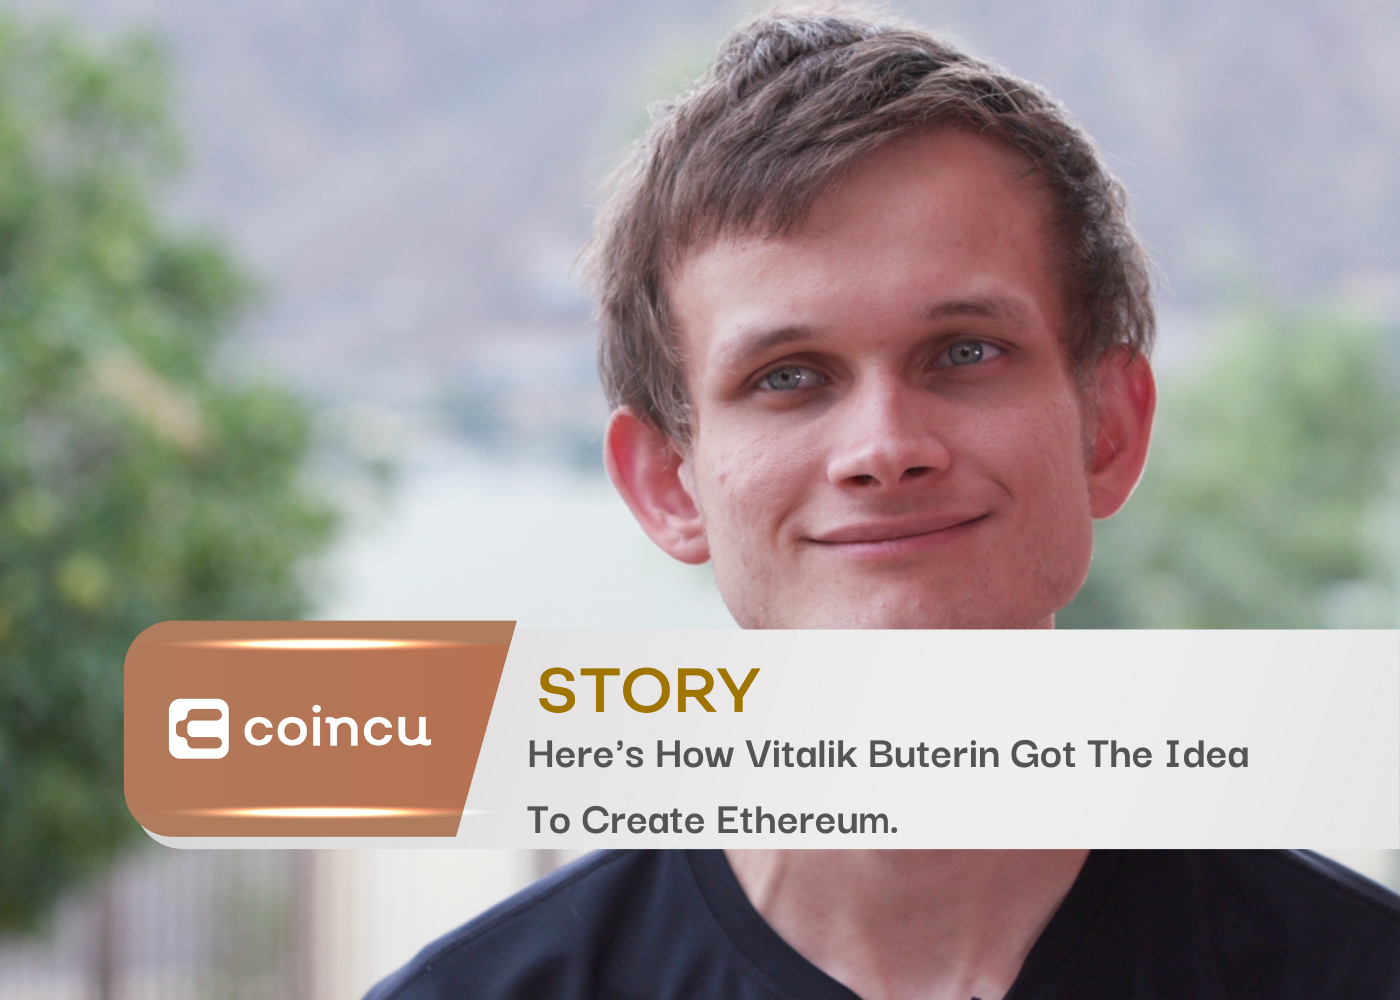 Here's How Vitalik Buterin Got The Idea To Create Ethereum.